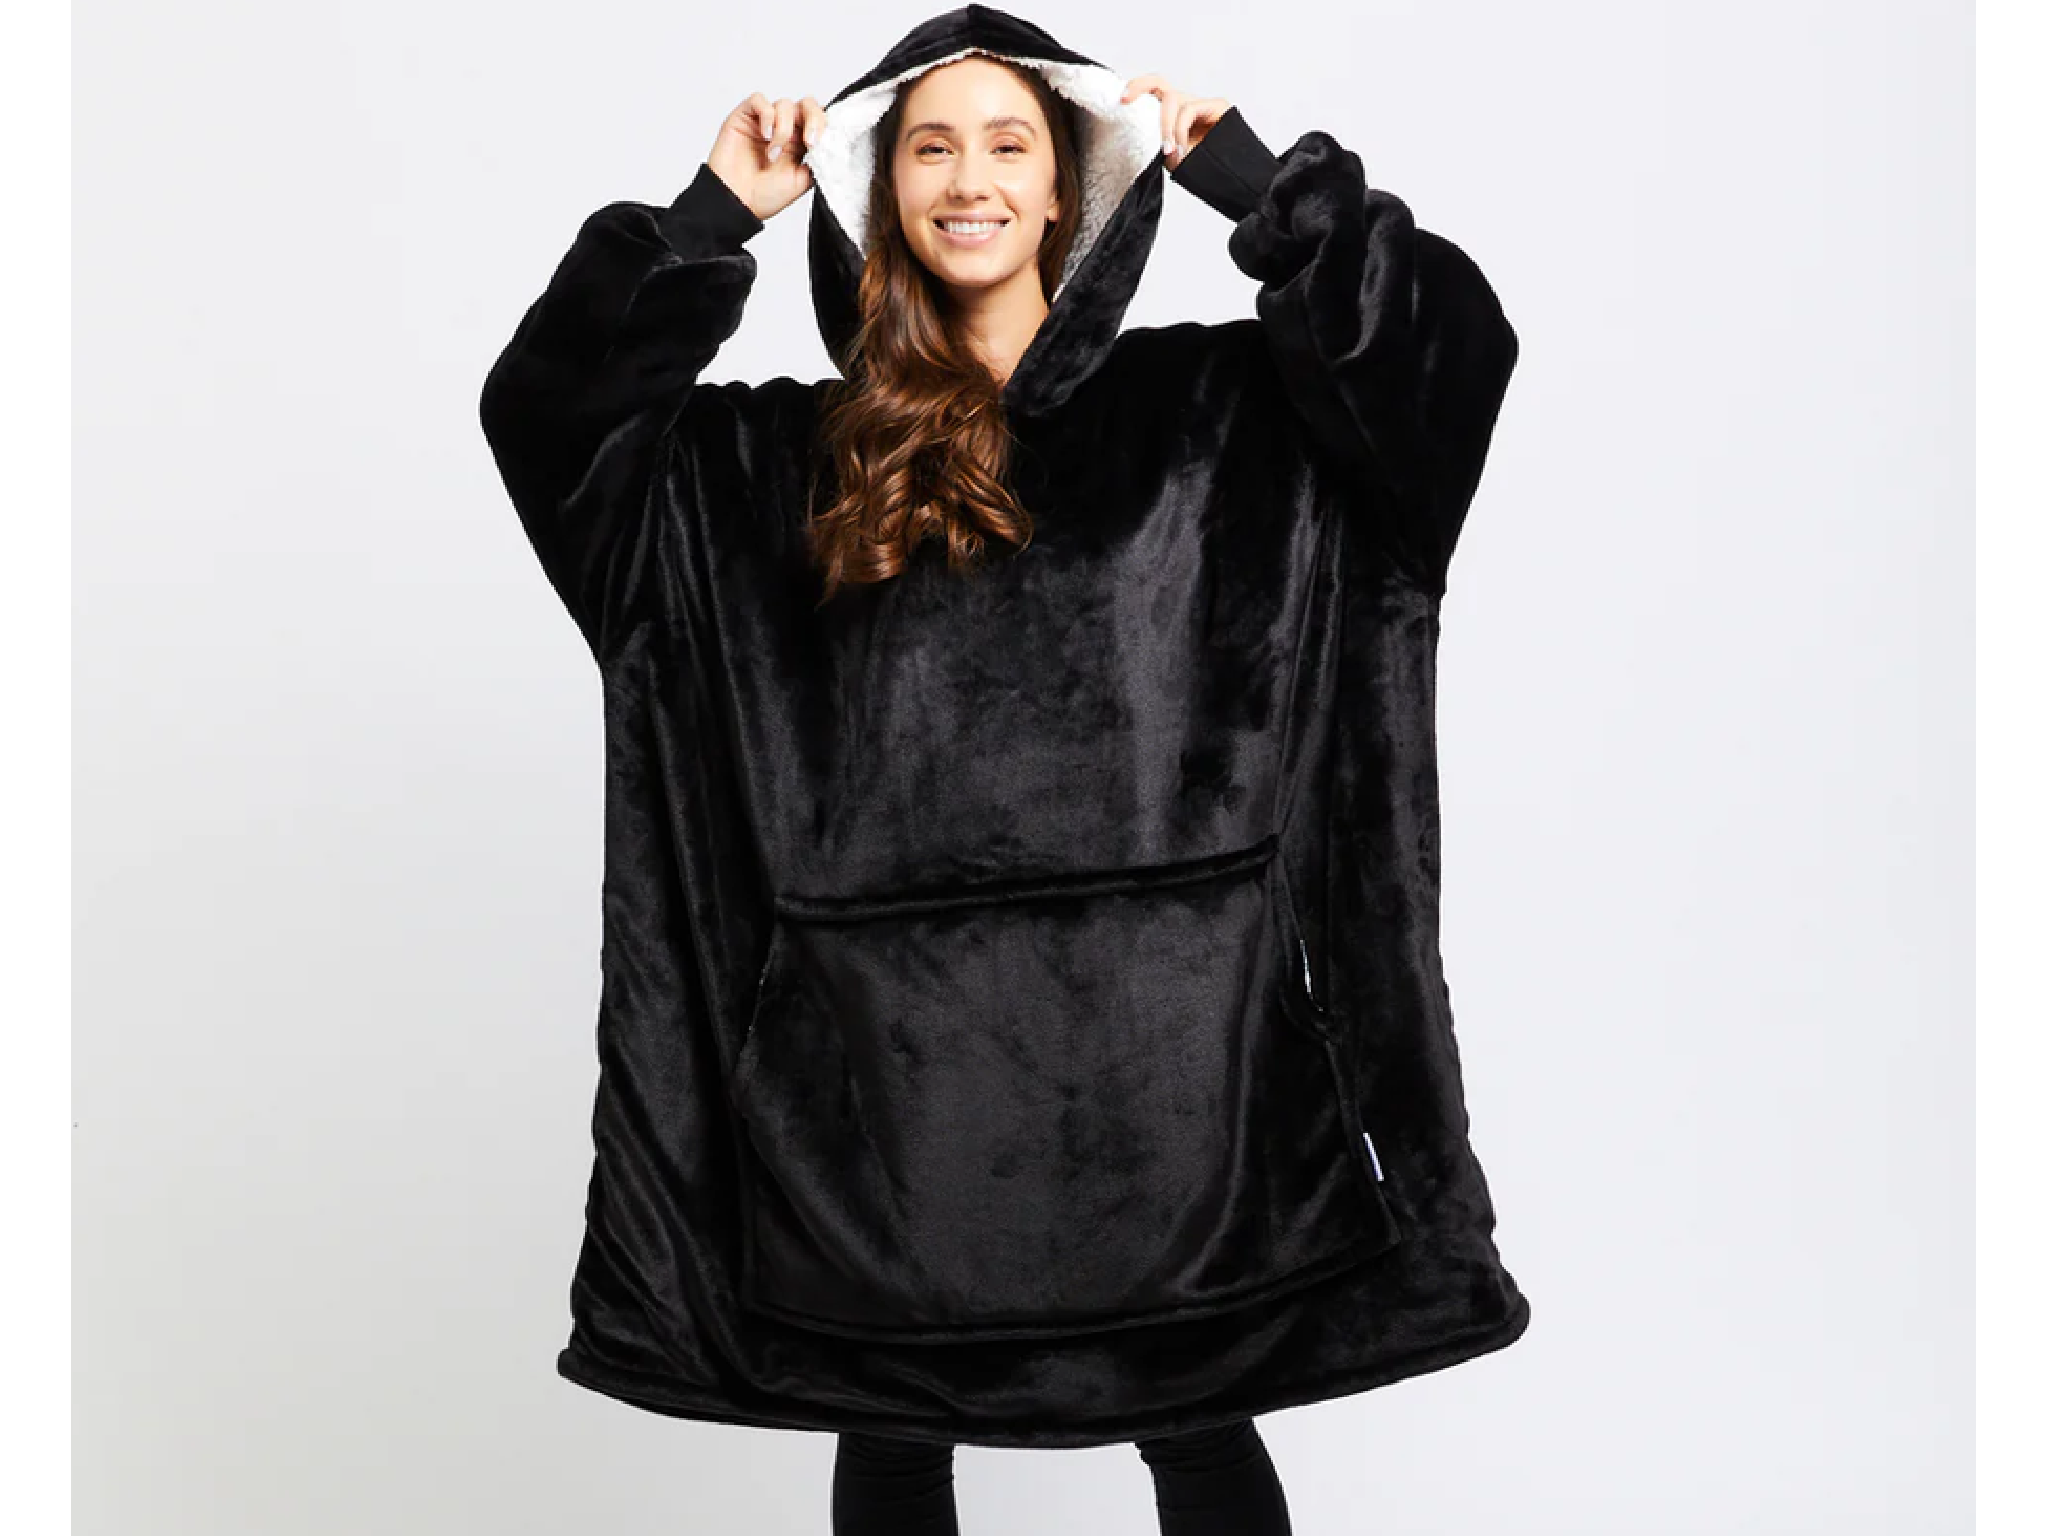 indybest, home & garden, black friday, oodie’s black friday sale includes 60% off blanket hoodies